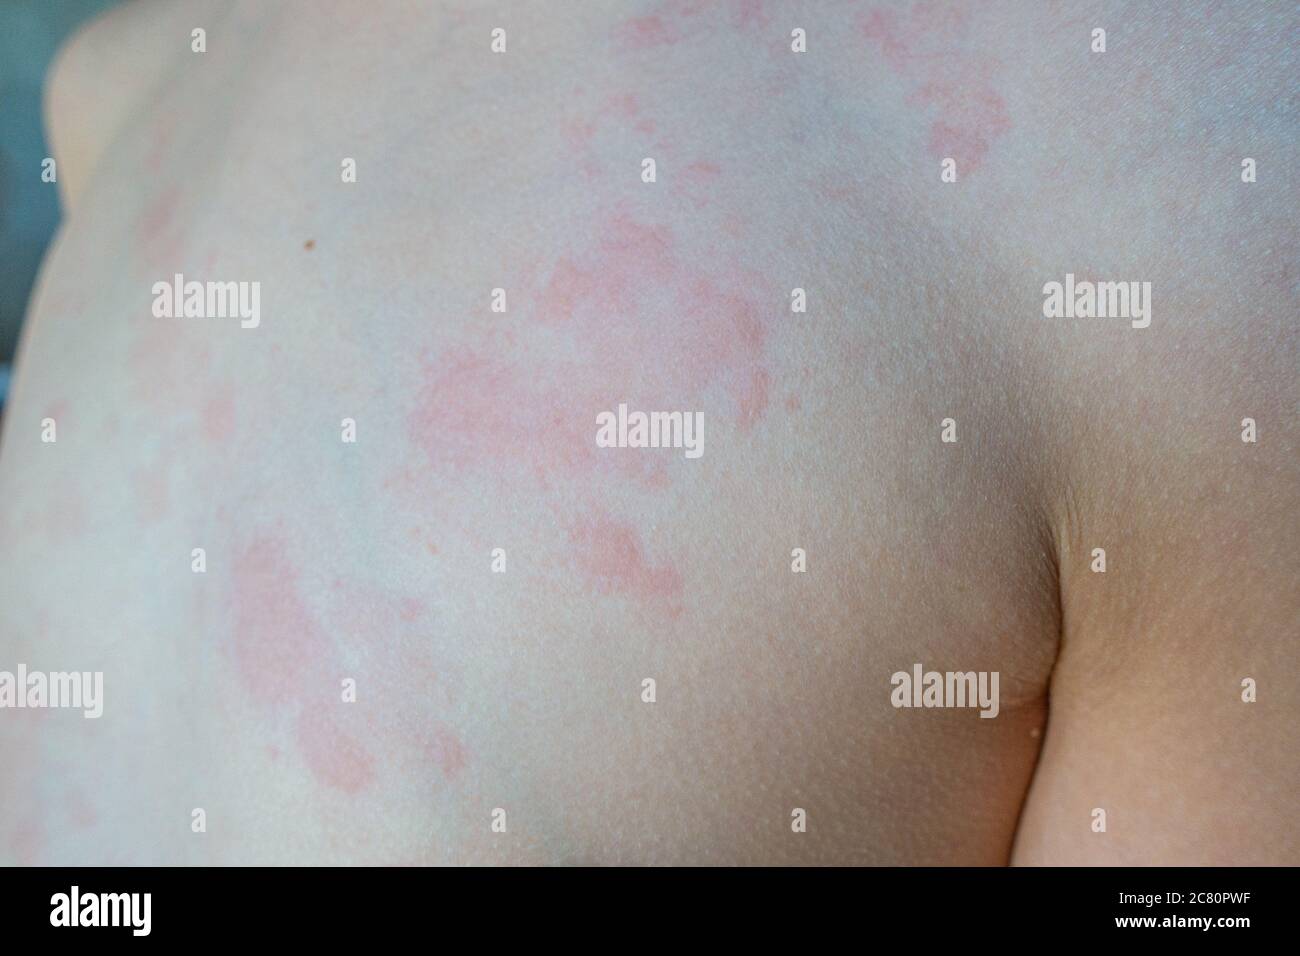 Un bambino si è rotto in orticaria, un'eruzione cutanea rossa arrabbiata in seguito a una reazione allergica. Foto Stock